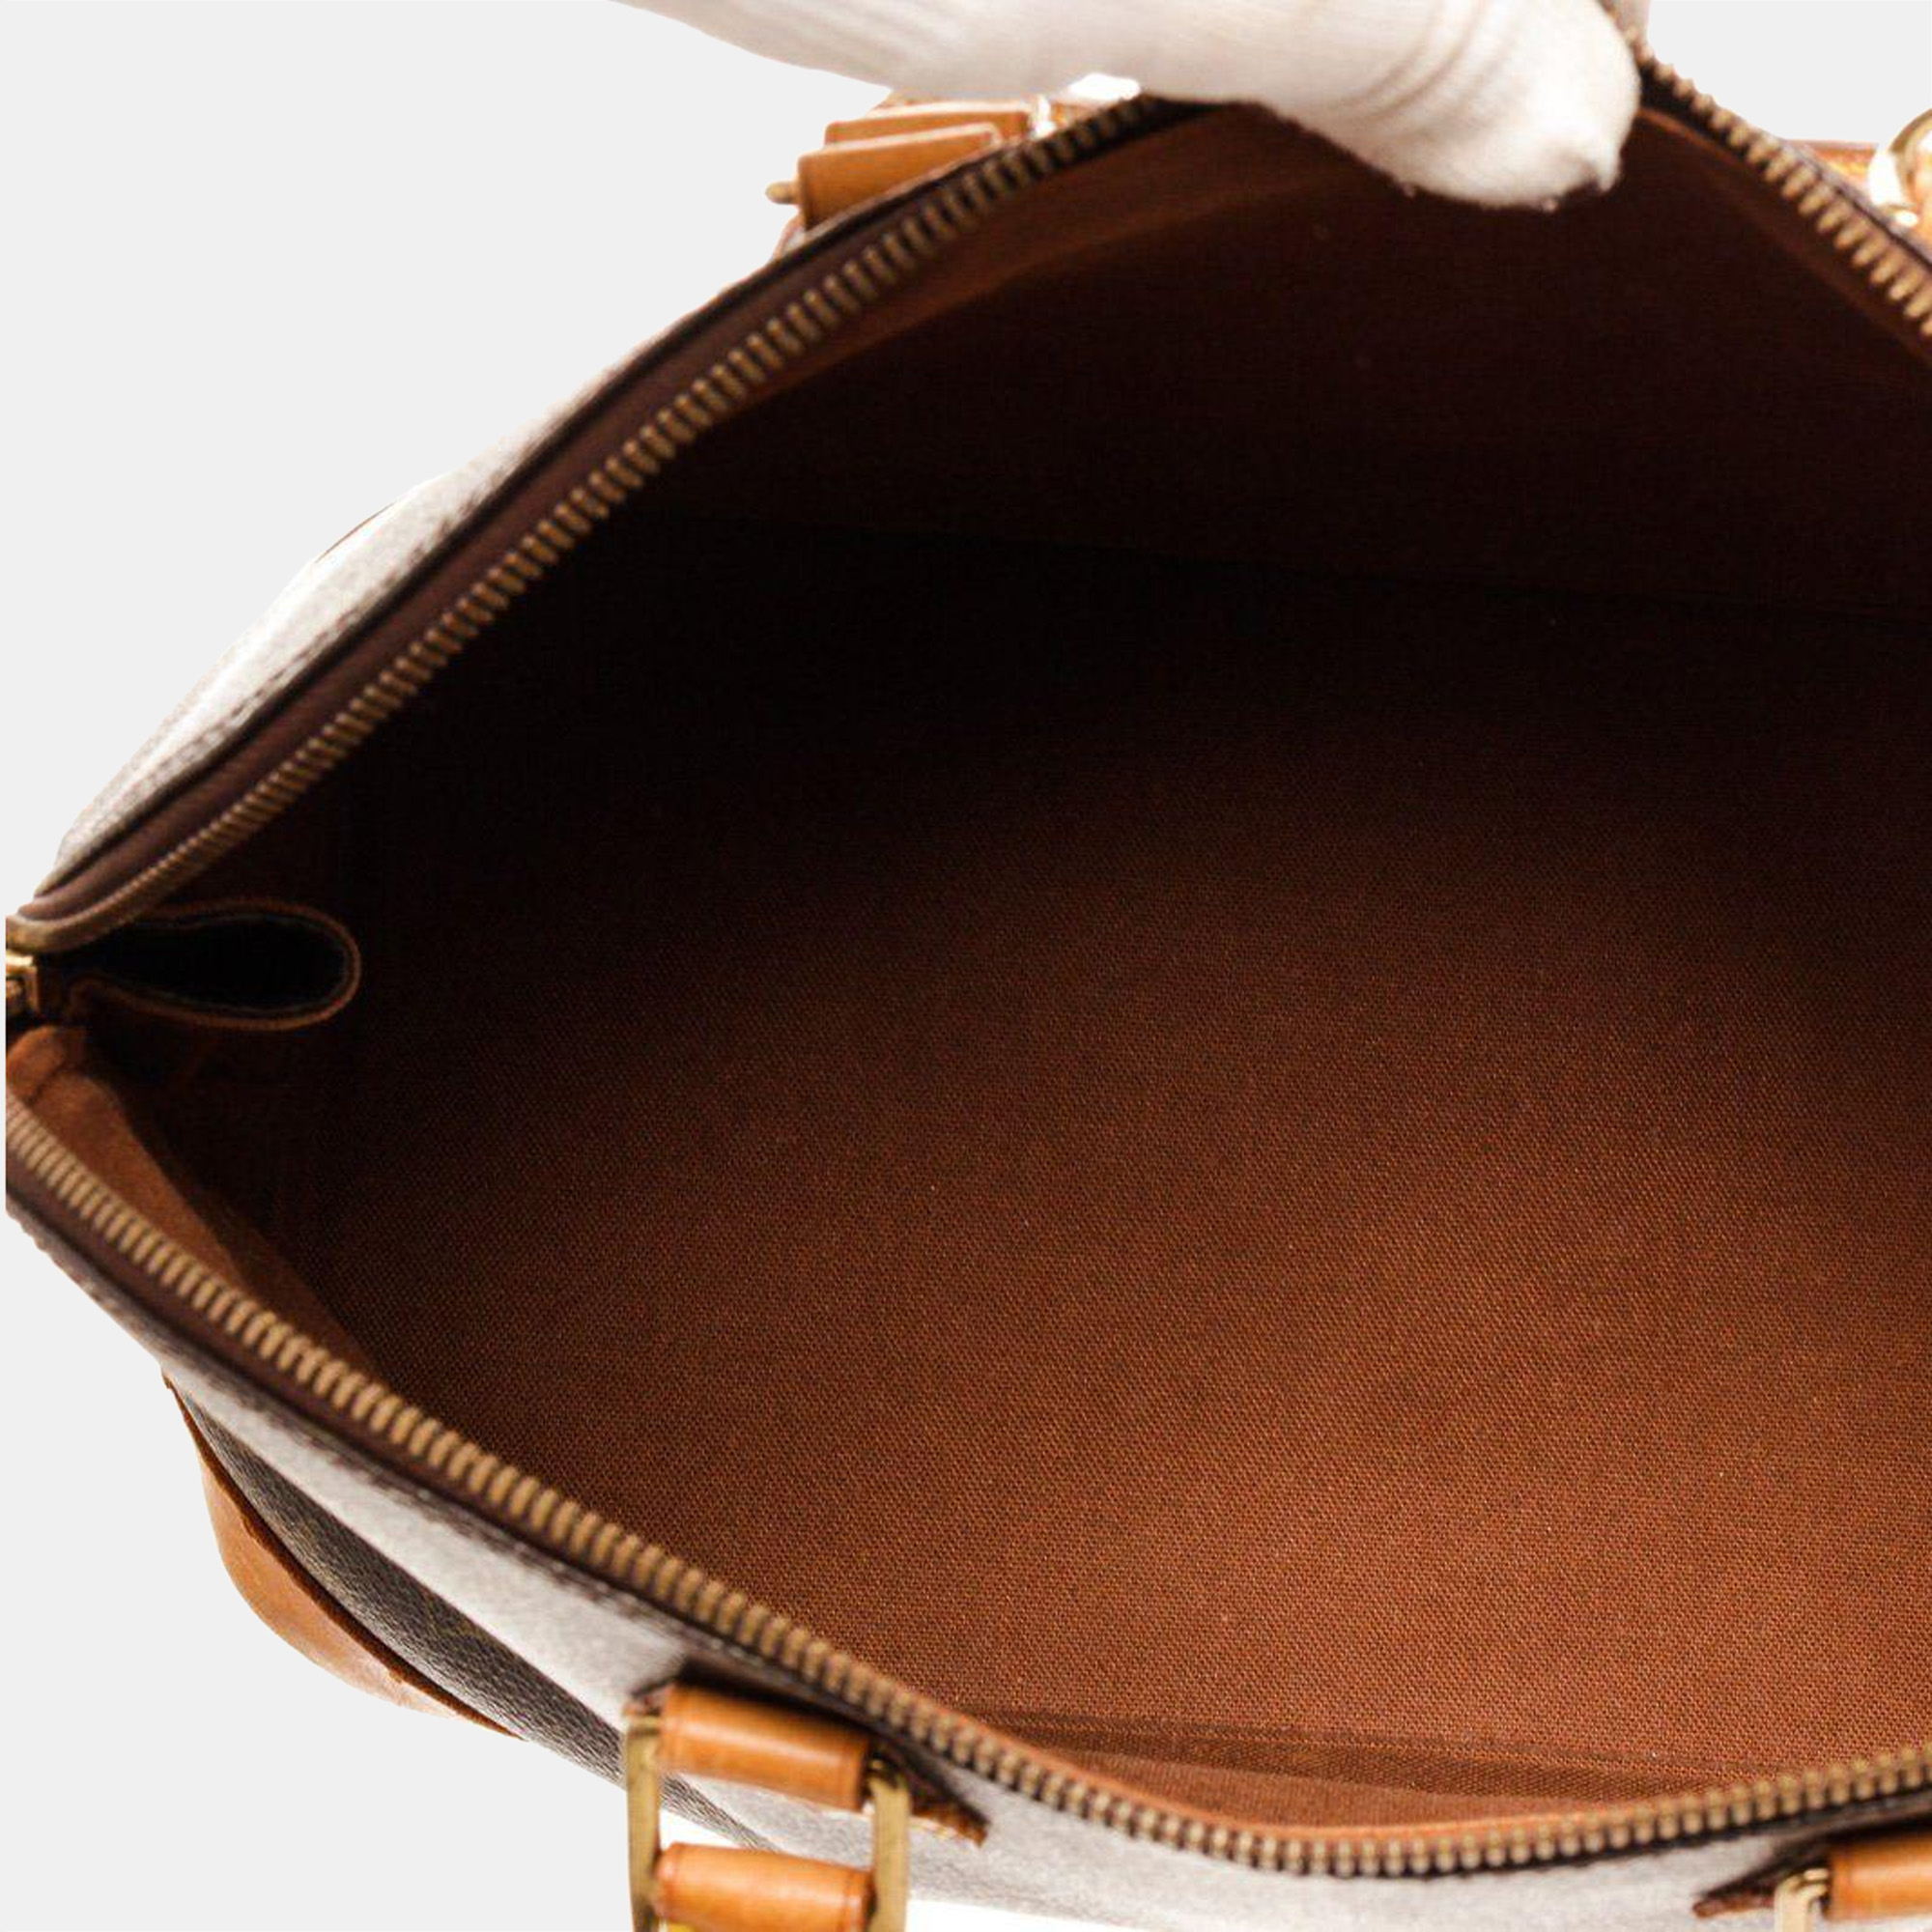 Louis Vuitton Brown Canvas Monogram Alma MM Handbag